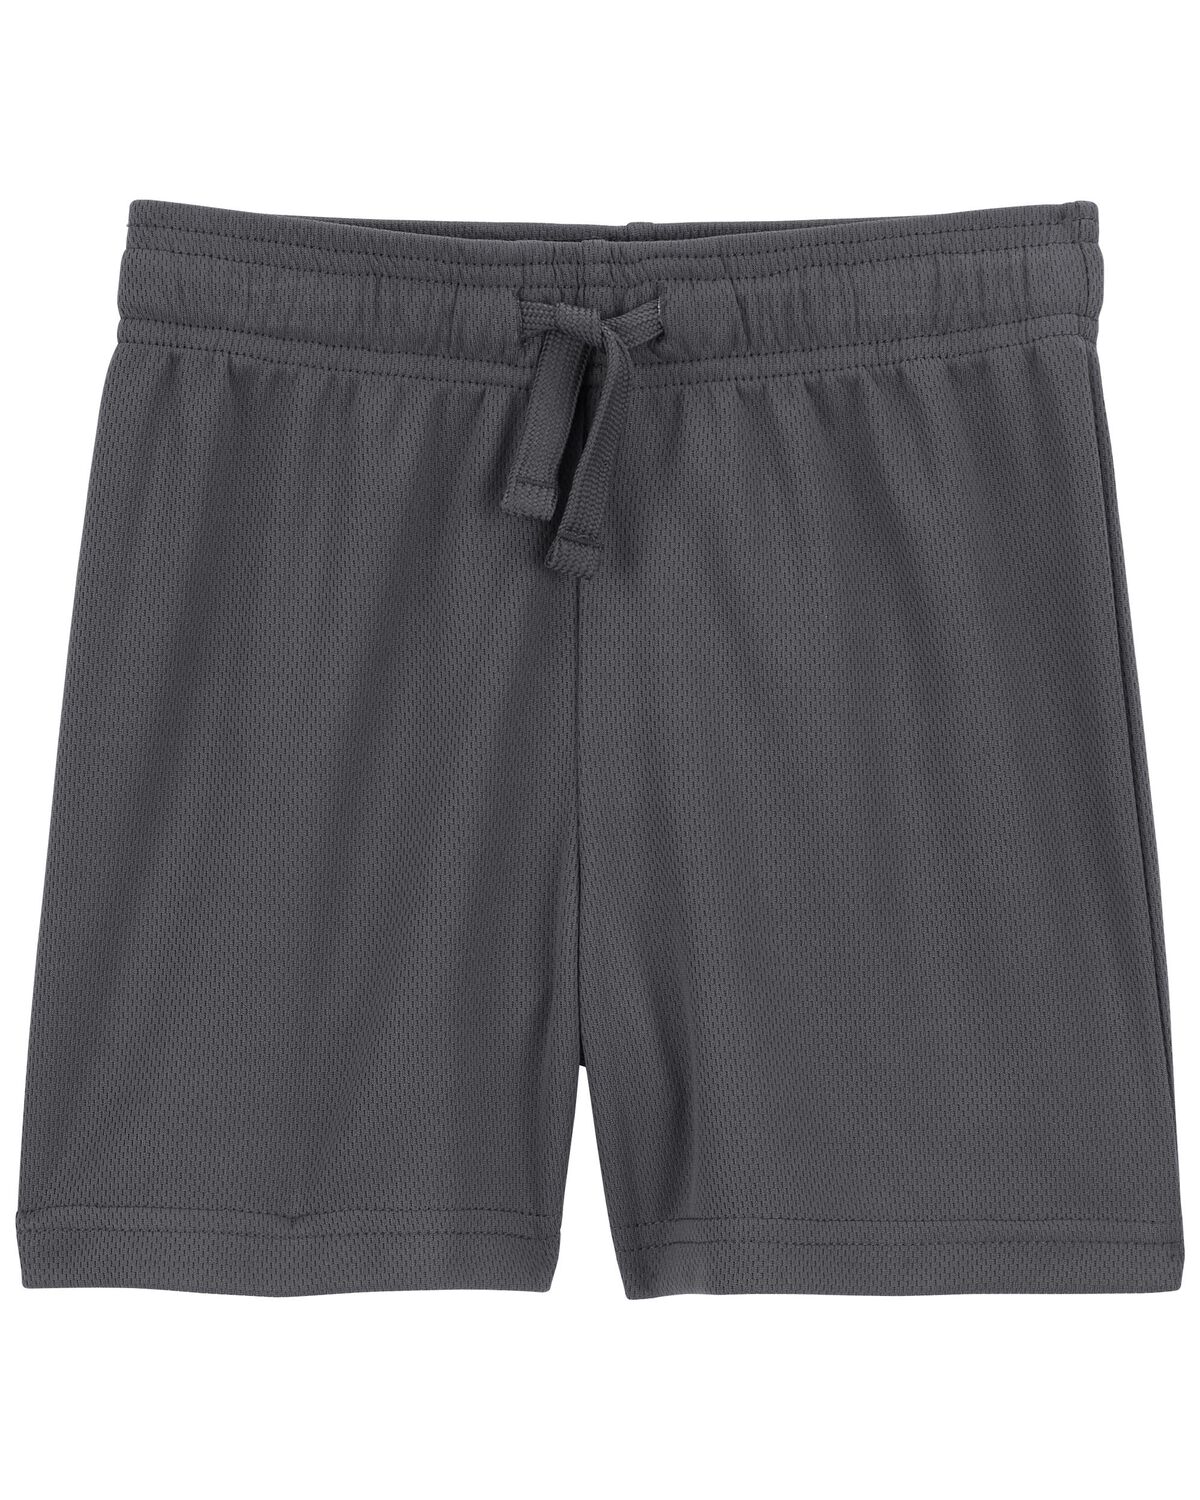 Grey Toddler Active Mesh Shorts | carters.com